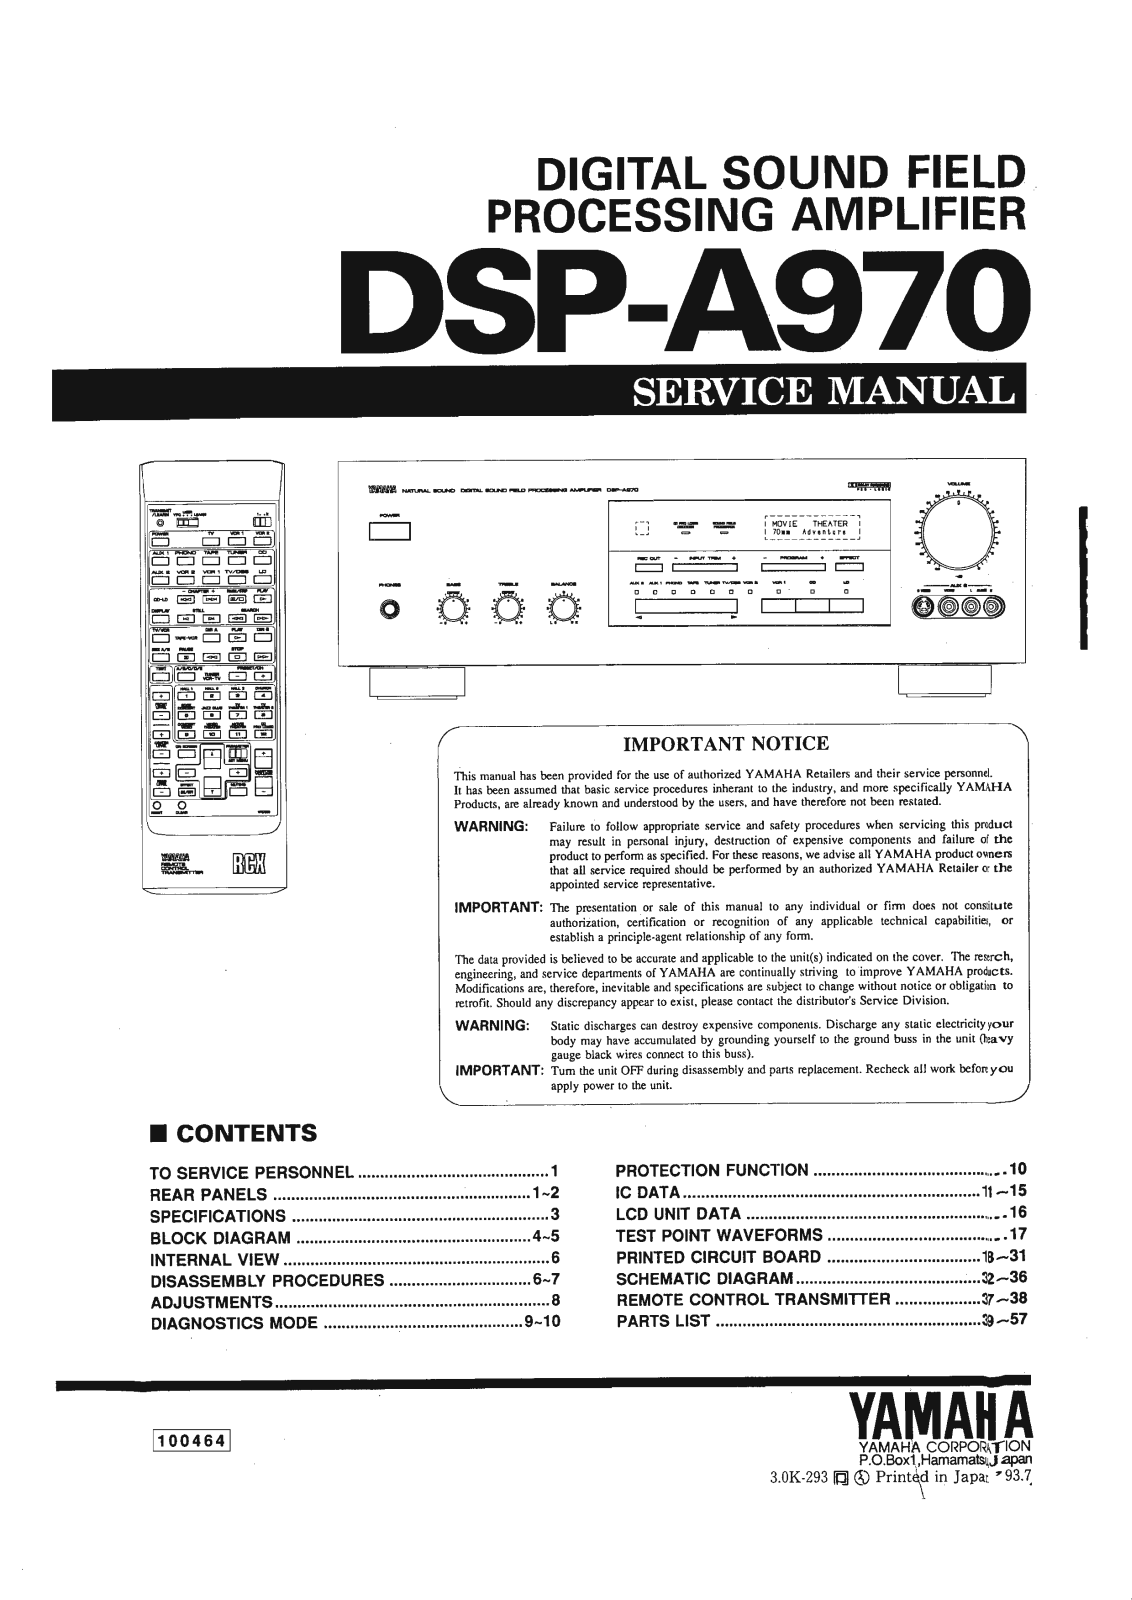 Yamaha DSPA-970 Service Manual